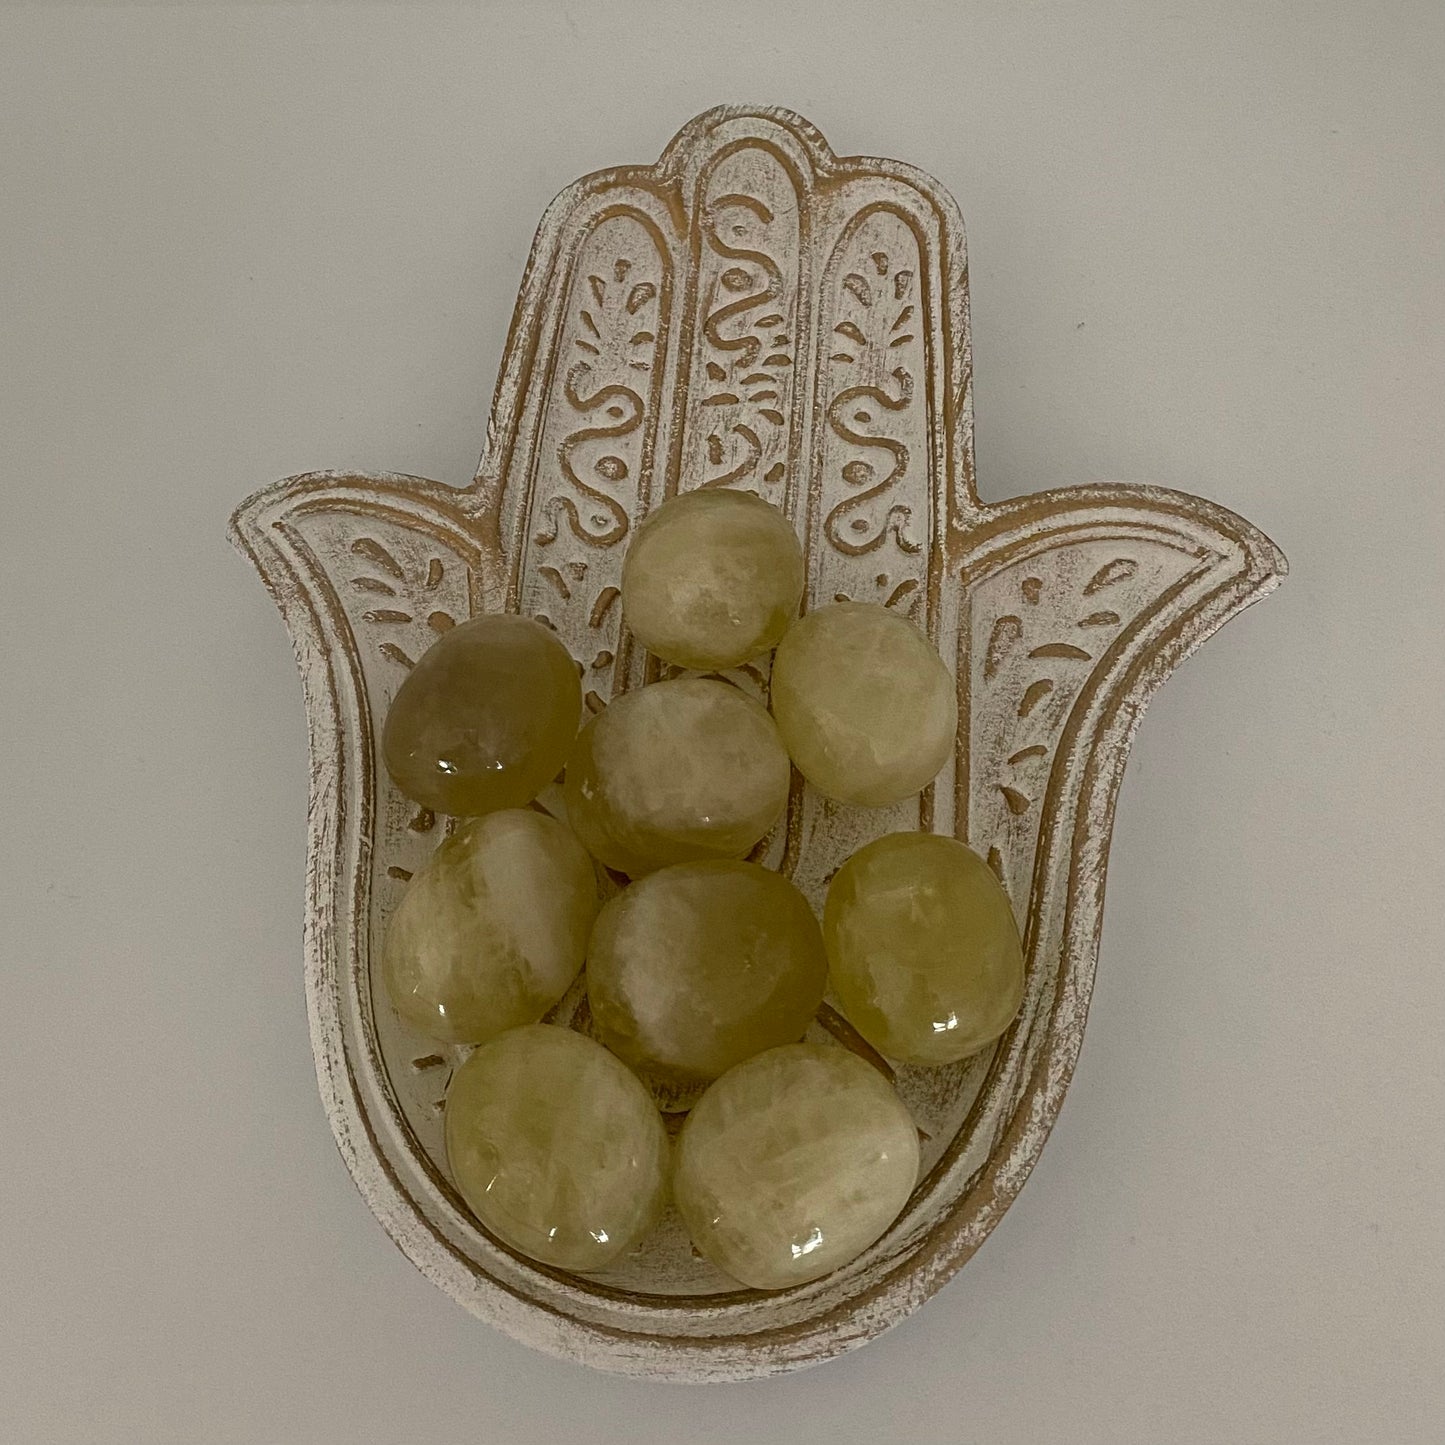 Yellow citrine glassy 3-4cm - size healing crystal and tumble XL gemstone